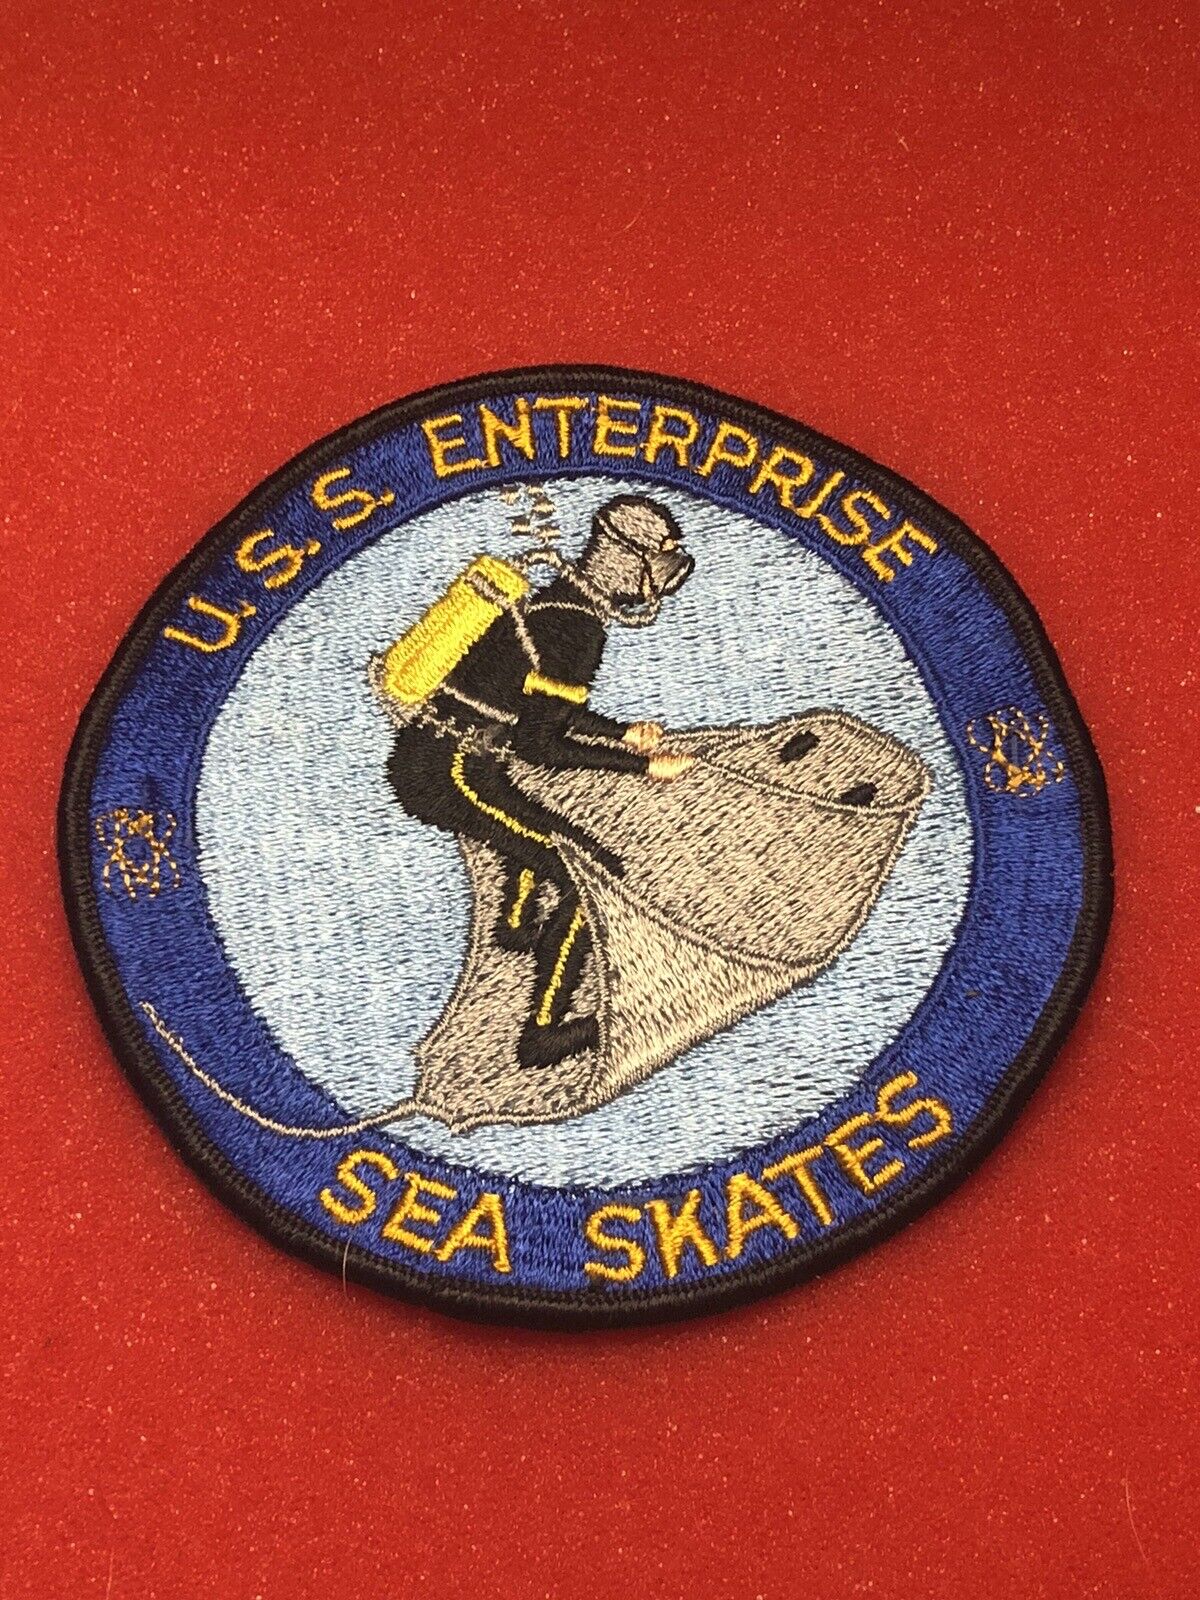 Carrier USS Enterprise CVN 65 Sea Skates US Navy Original Patch